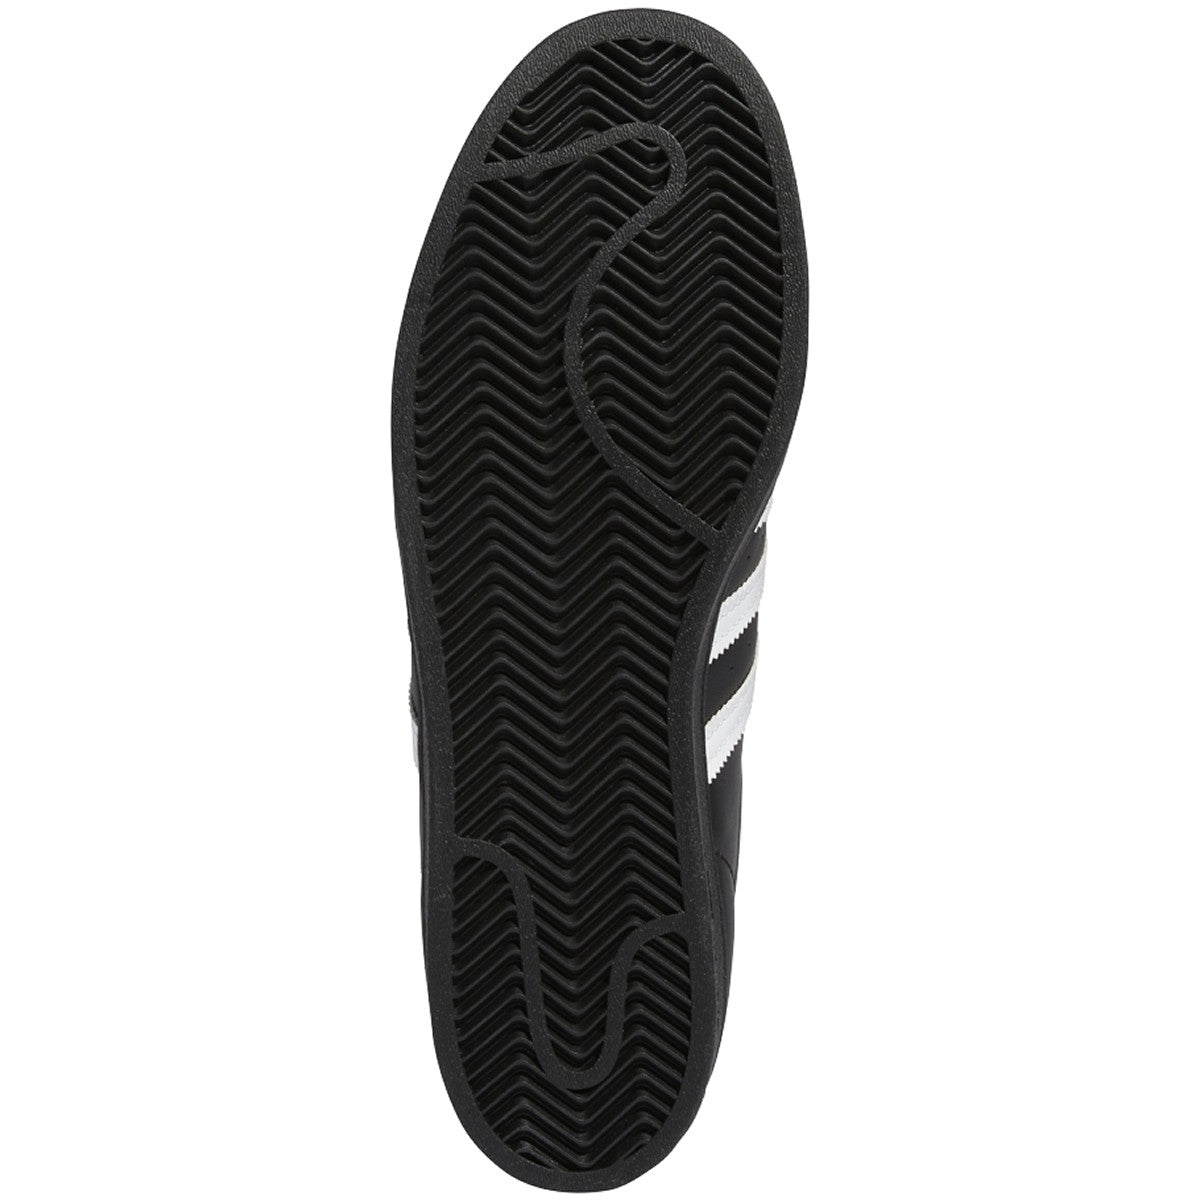 Core Black Superstar ADV Adidas Skateboarding Shoe Bottom